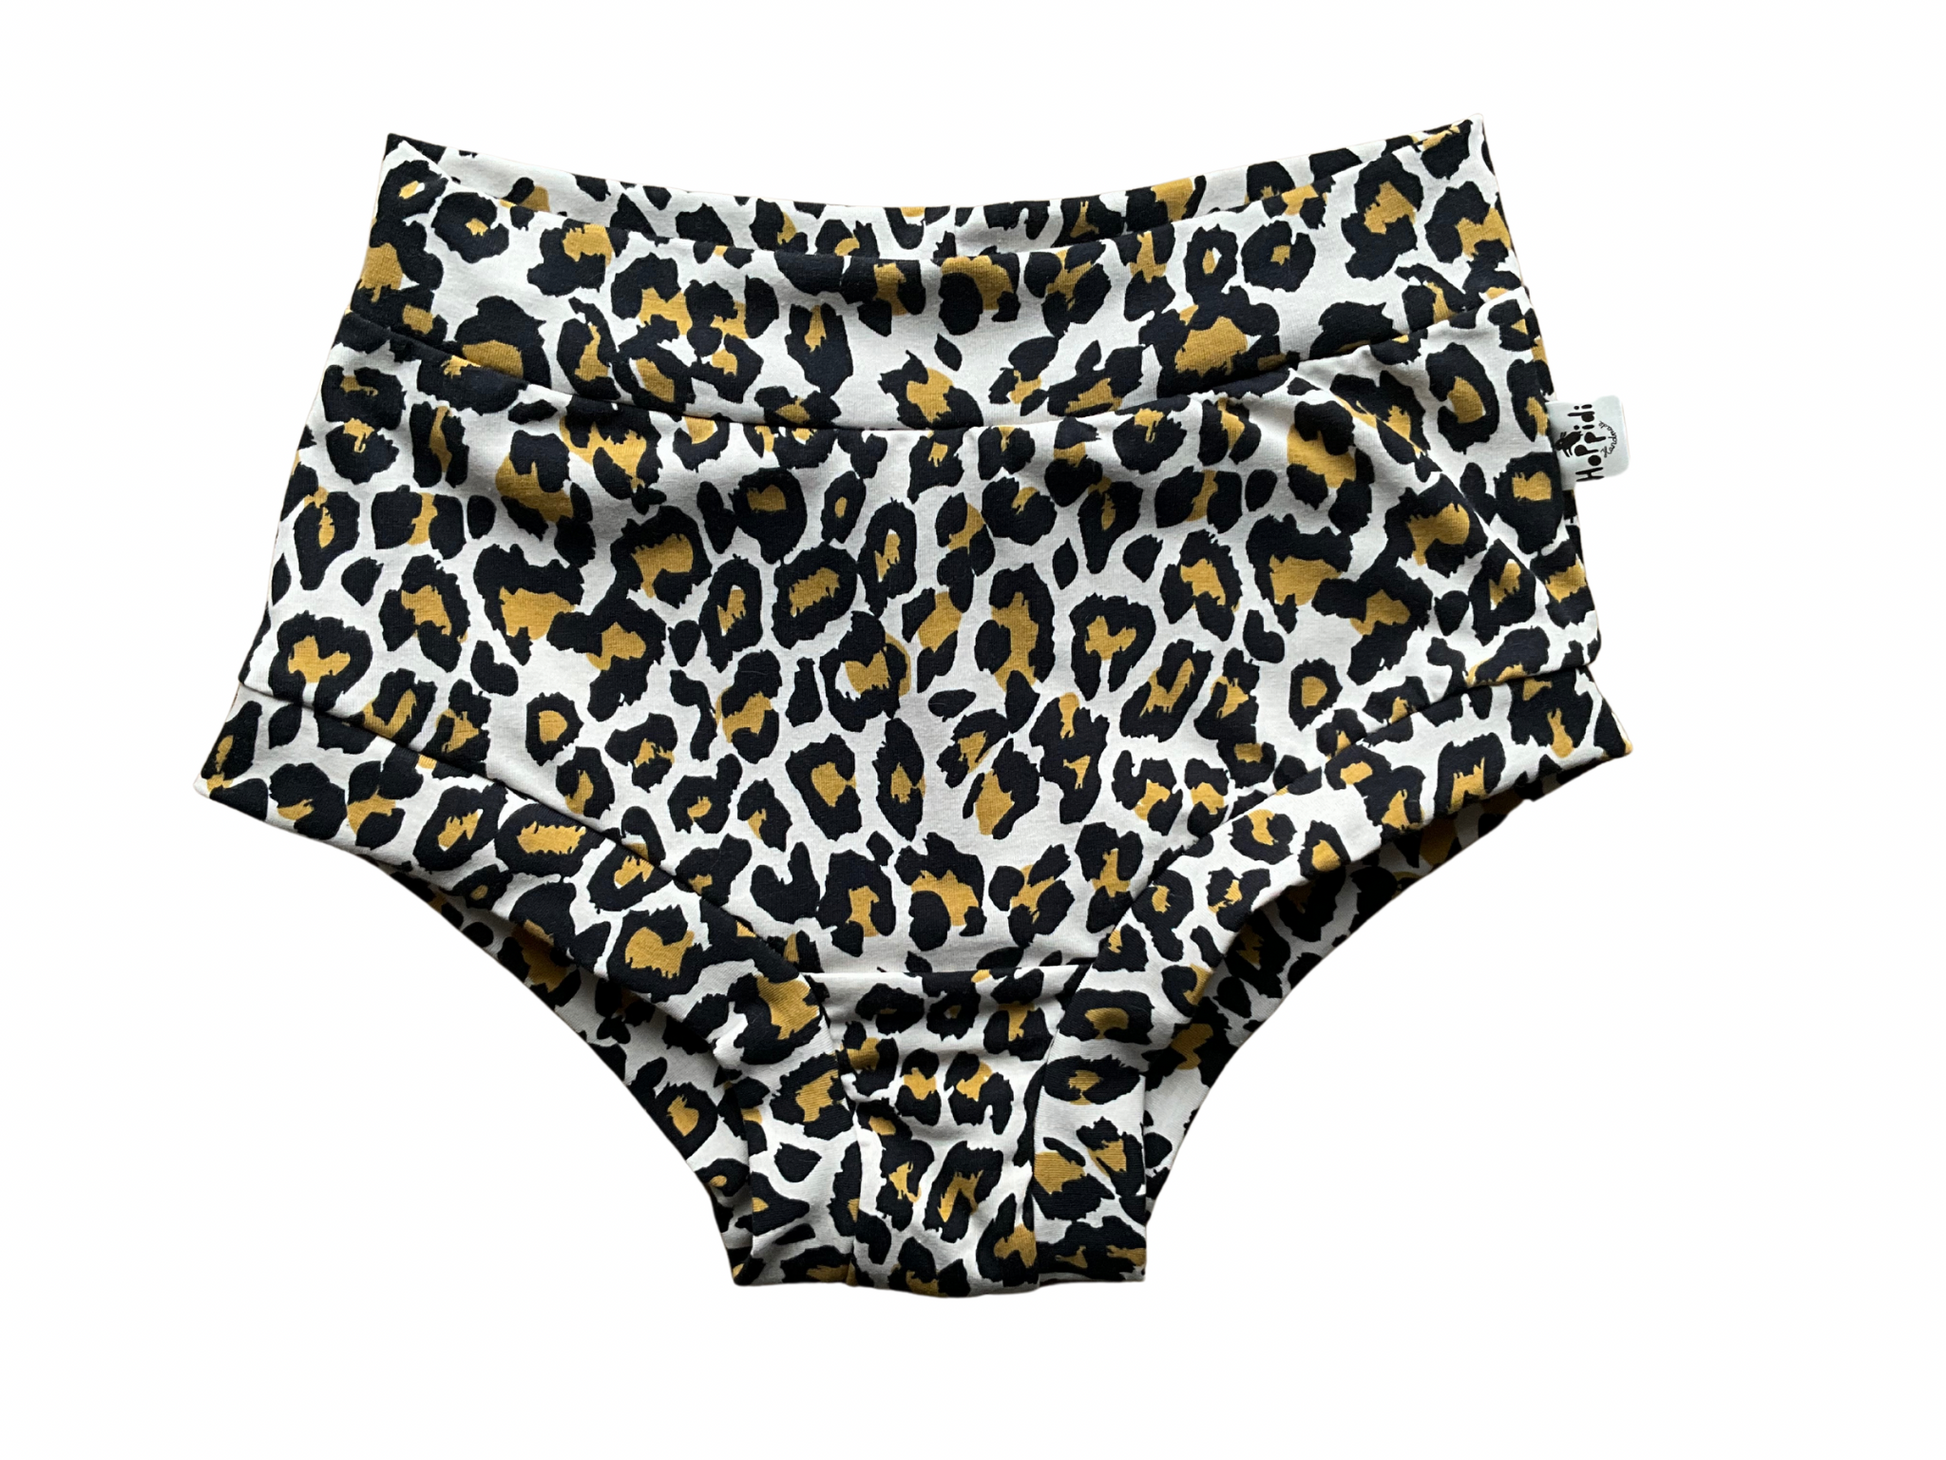 High waisted women’s underwear with black Cheetah spots on beige background